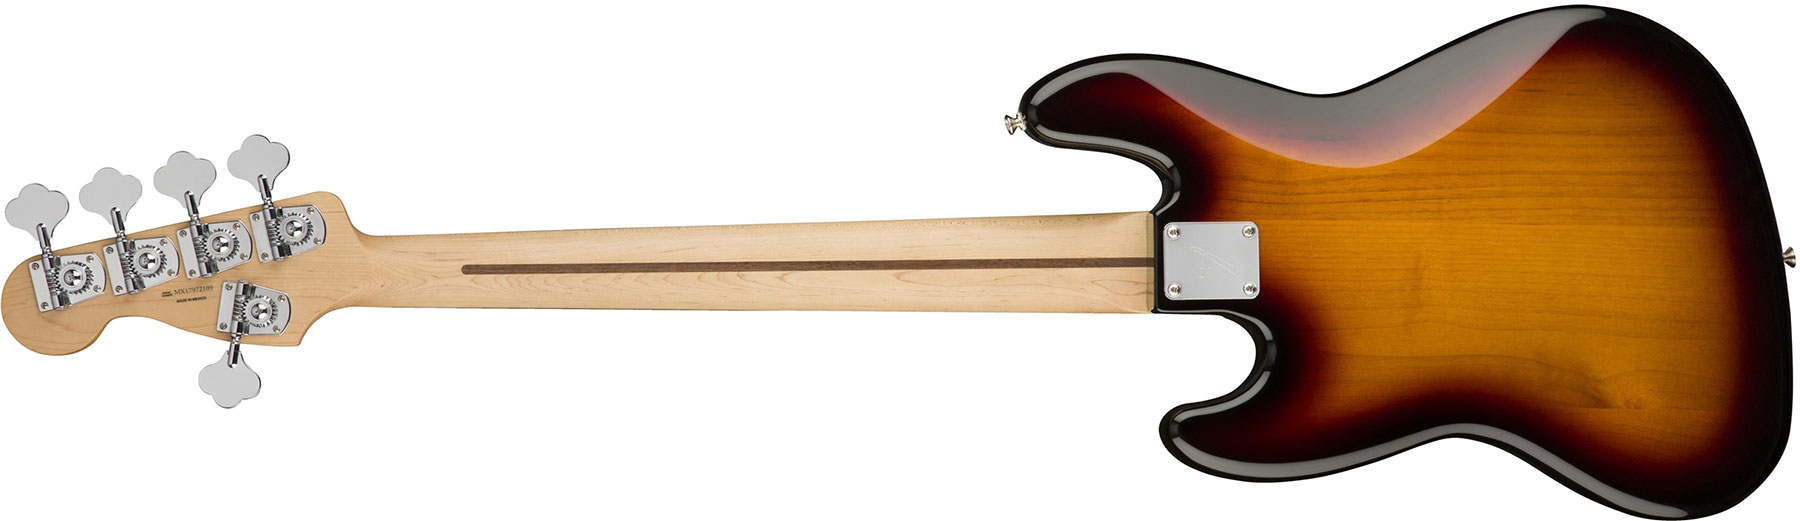 Fender Jazz Bass Player V 5-cordes Mex Pf - 3-color Sunburst - Solidbody E-bass - Variation 1